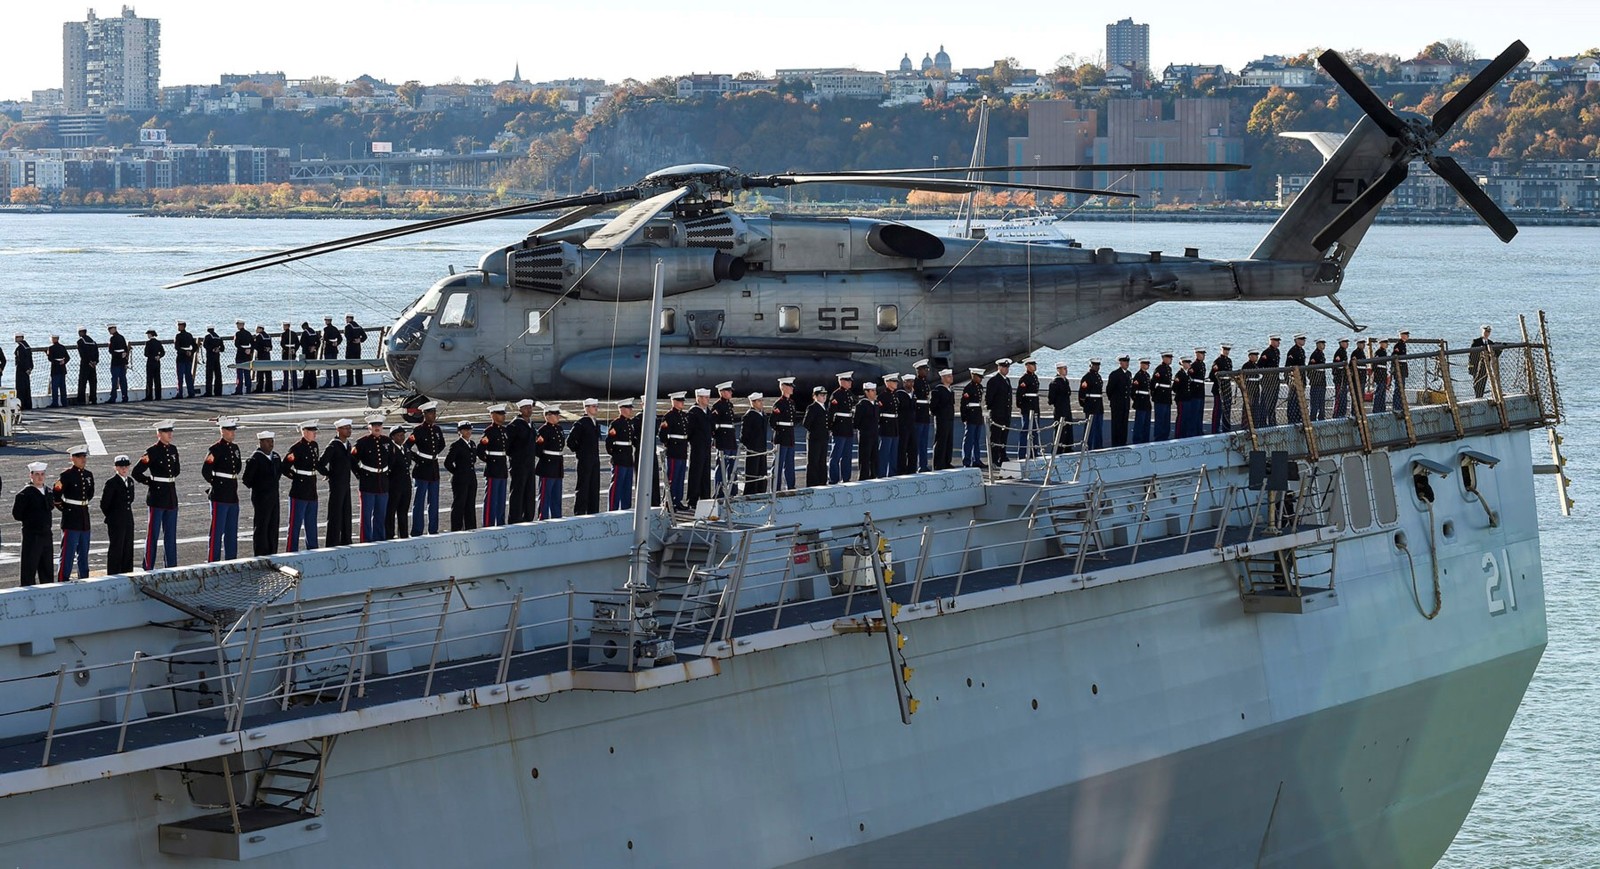 lpd-21 uss new york san antonio class amphibious transport dock ship navy 19 veterans week